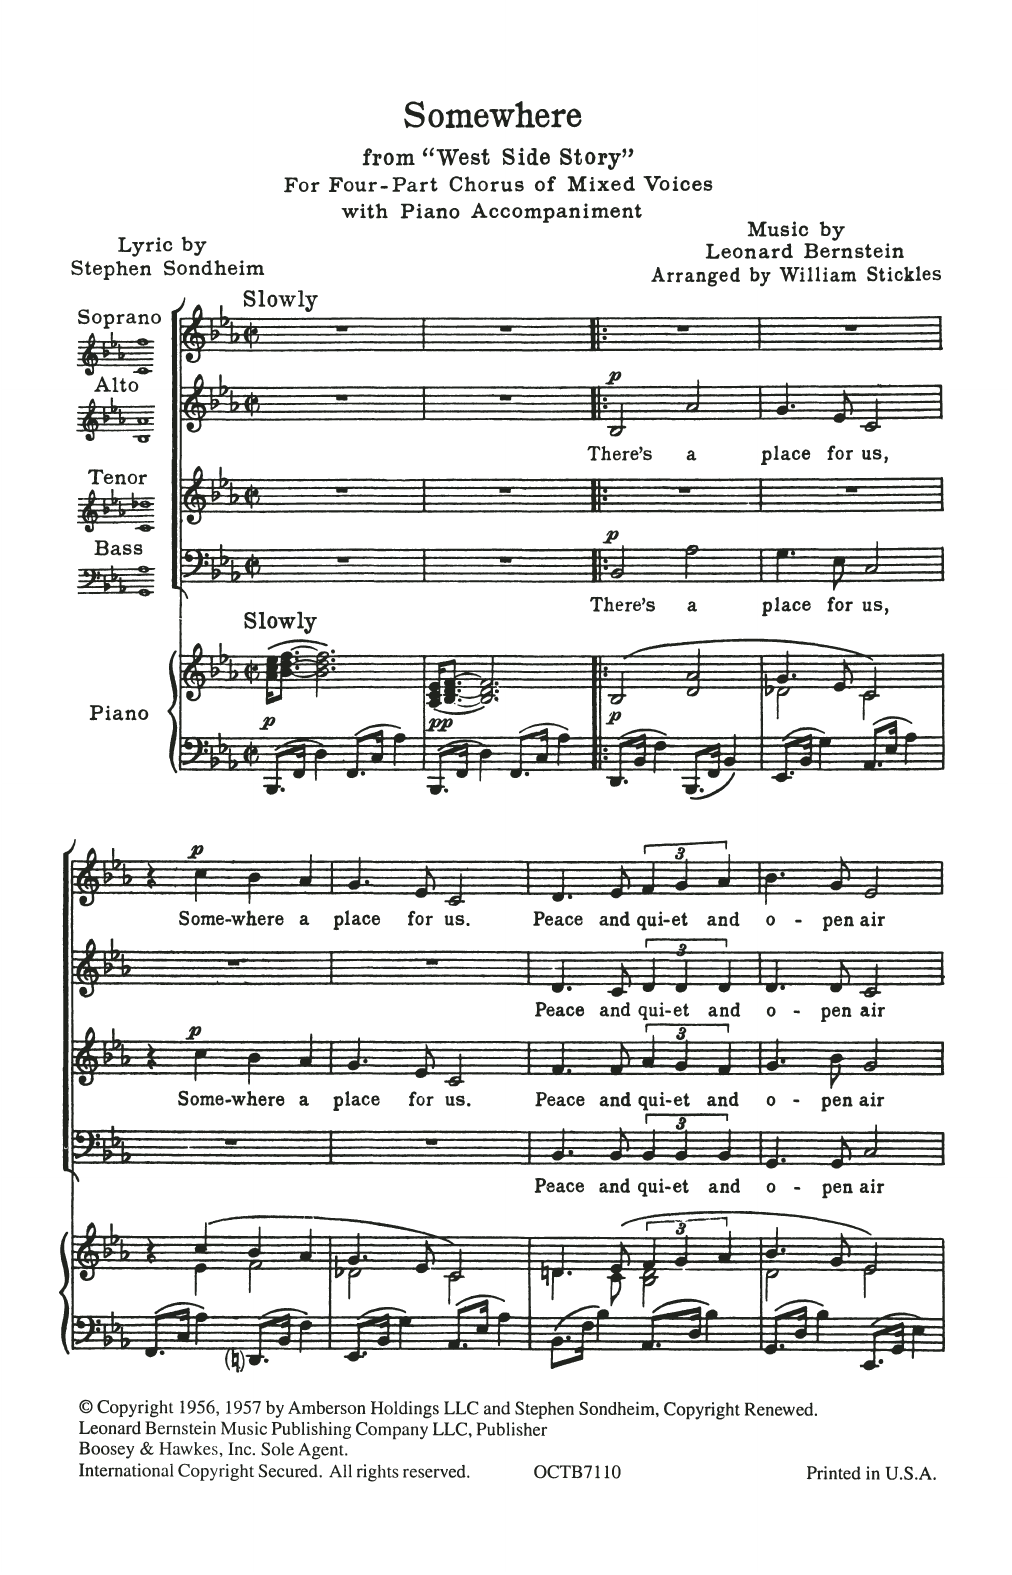 Leonard Bernstein & Stephen Sondheim Somewhere (from West Side Story) (arr. William Stickles) Sheet Music Notes & Chords for SATB Choir - Download or Print PDF